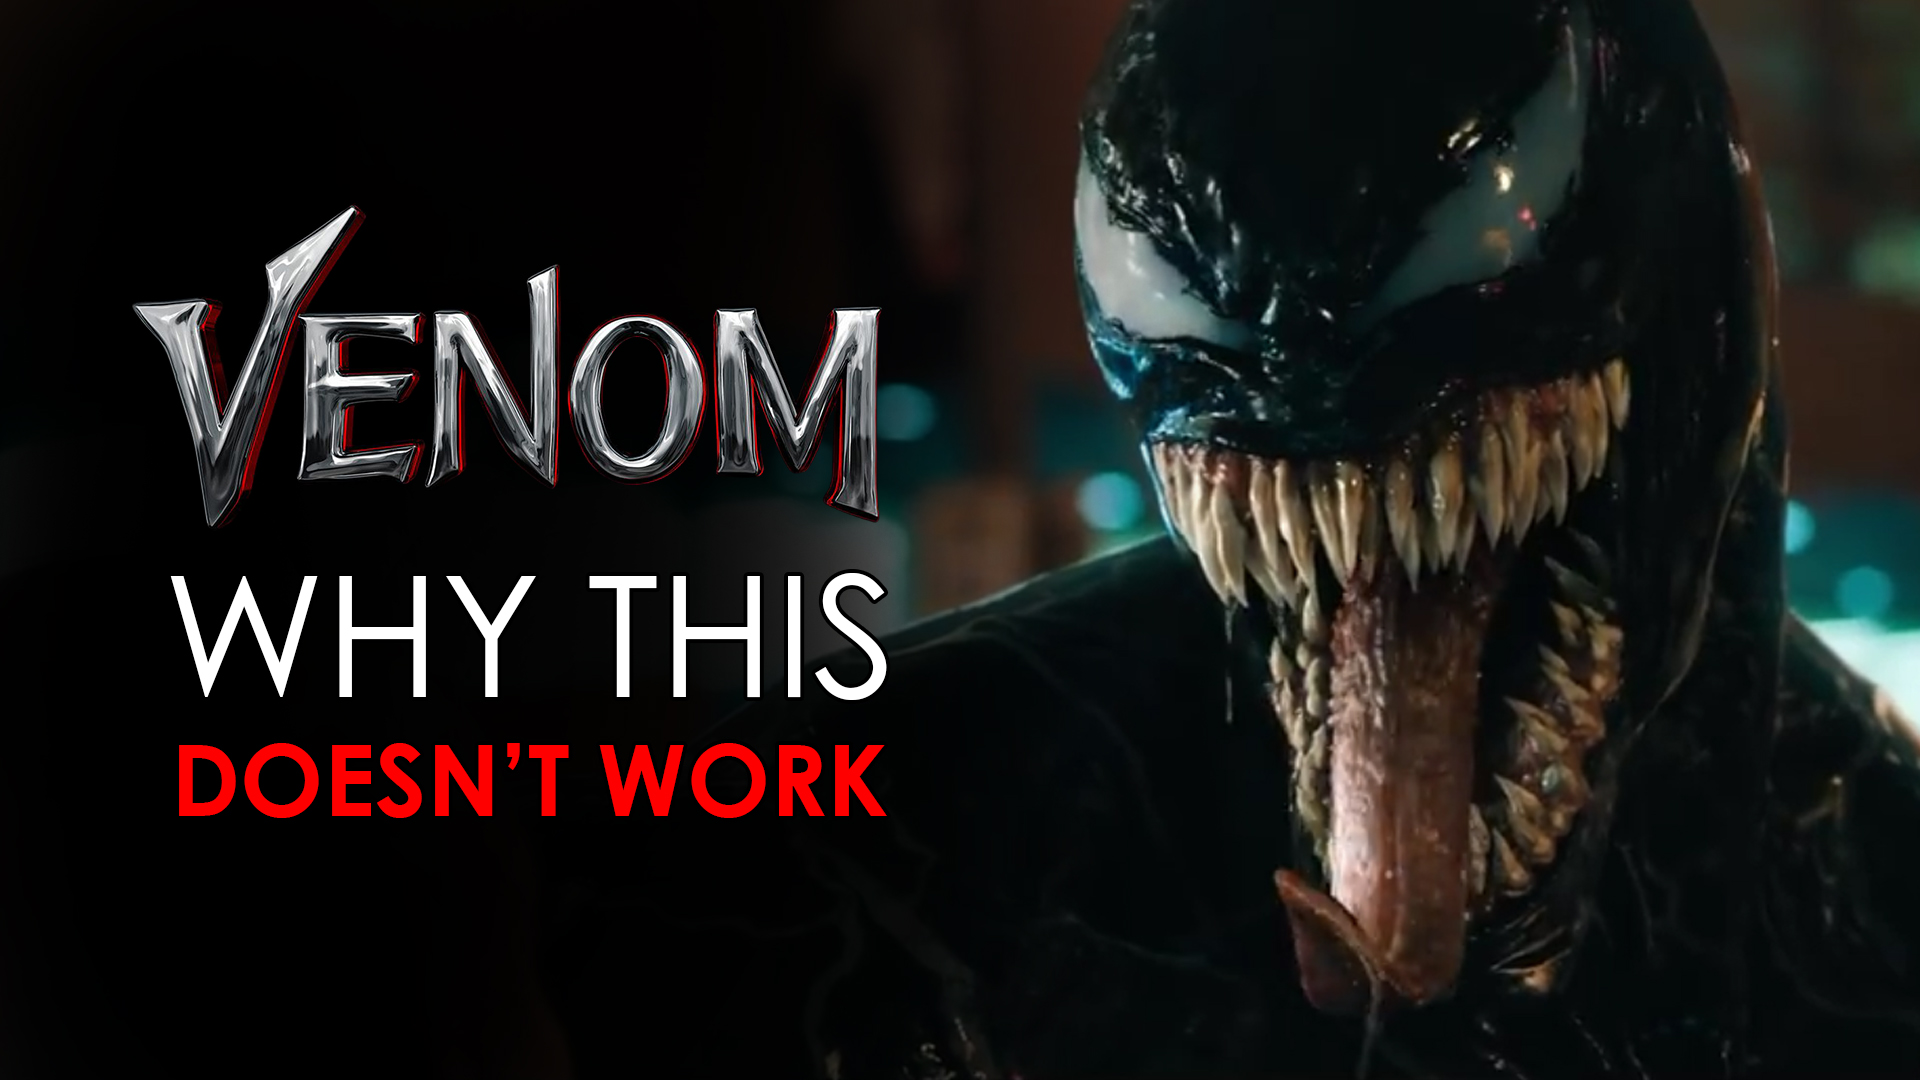 Venom why sony's venom movie doesn't work or make sense and sucks ending explained video essay